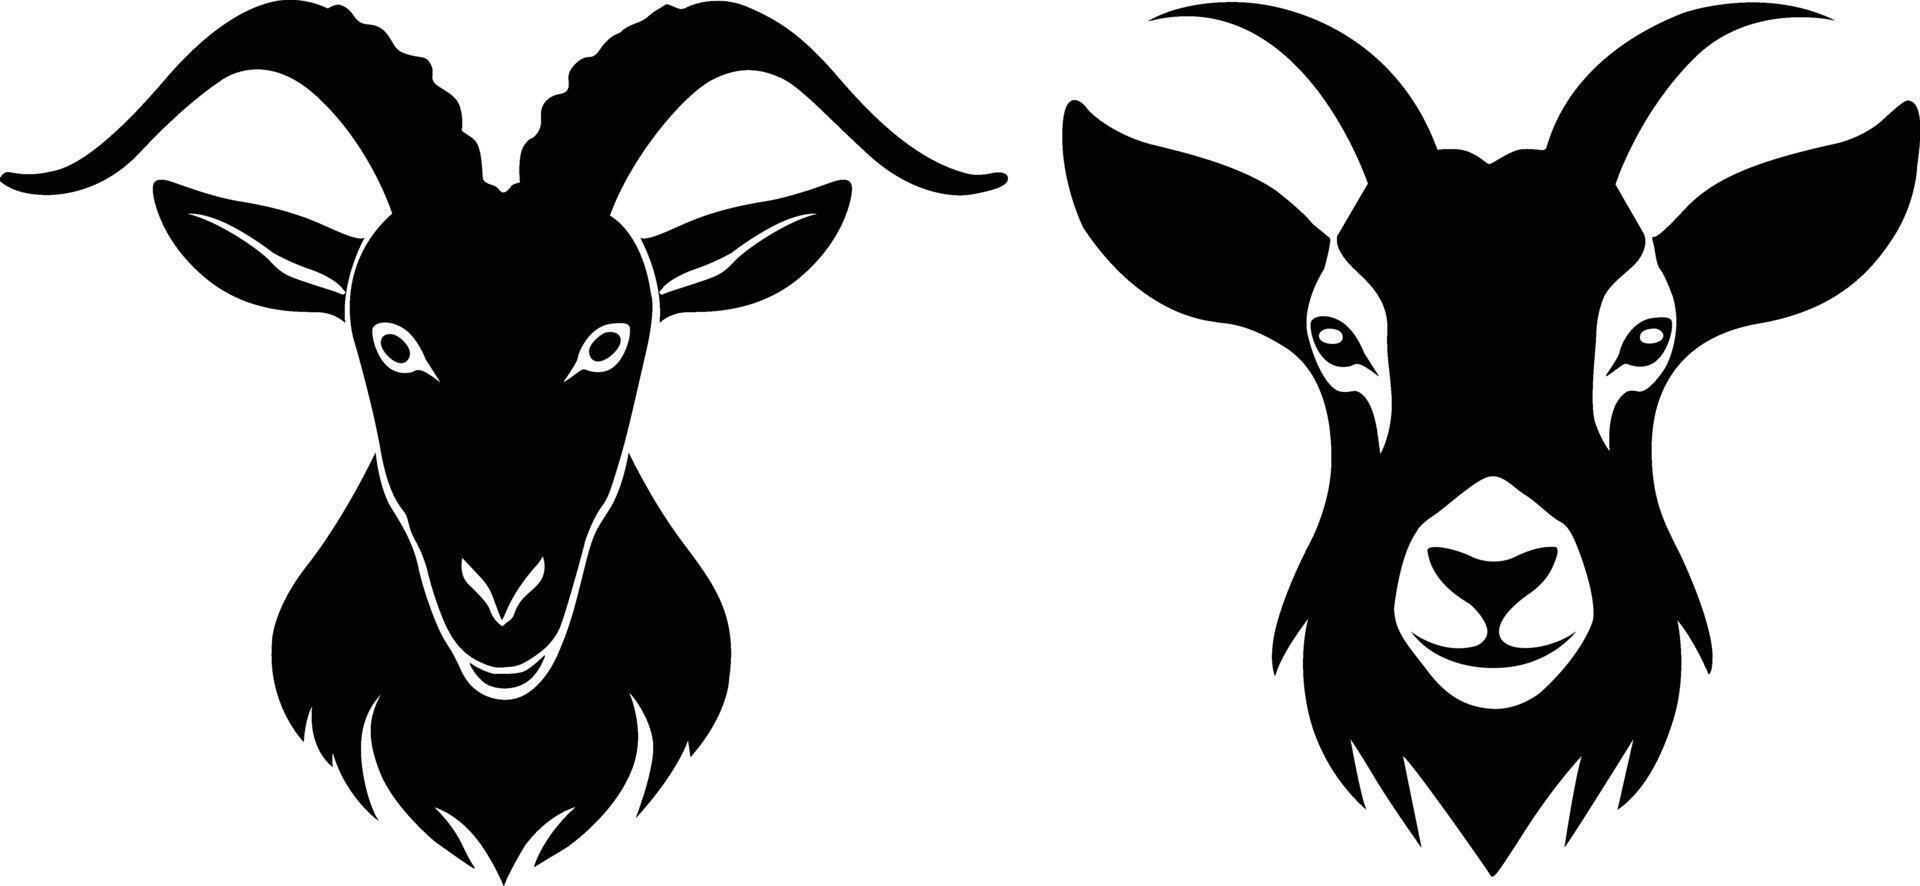 Goat Head Silhouette Vector